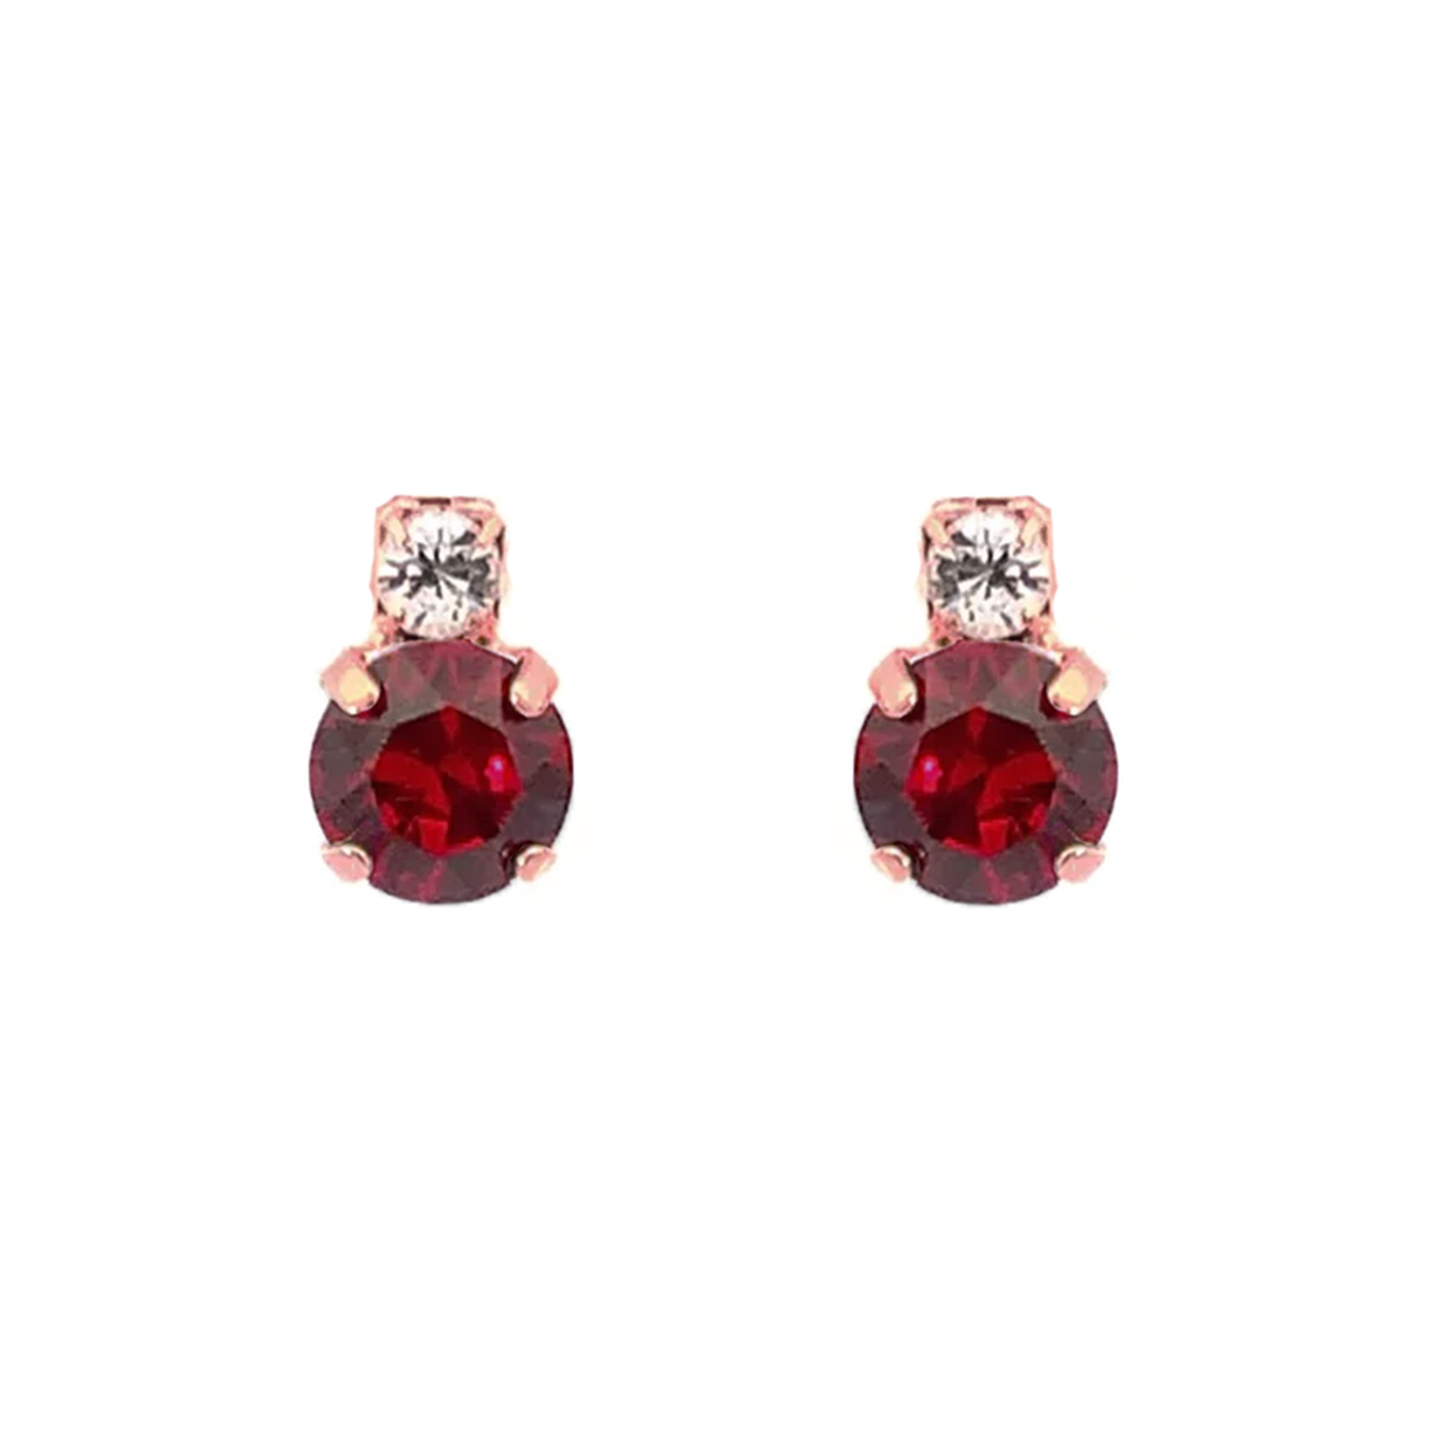 Ruby stud earrings rose gold